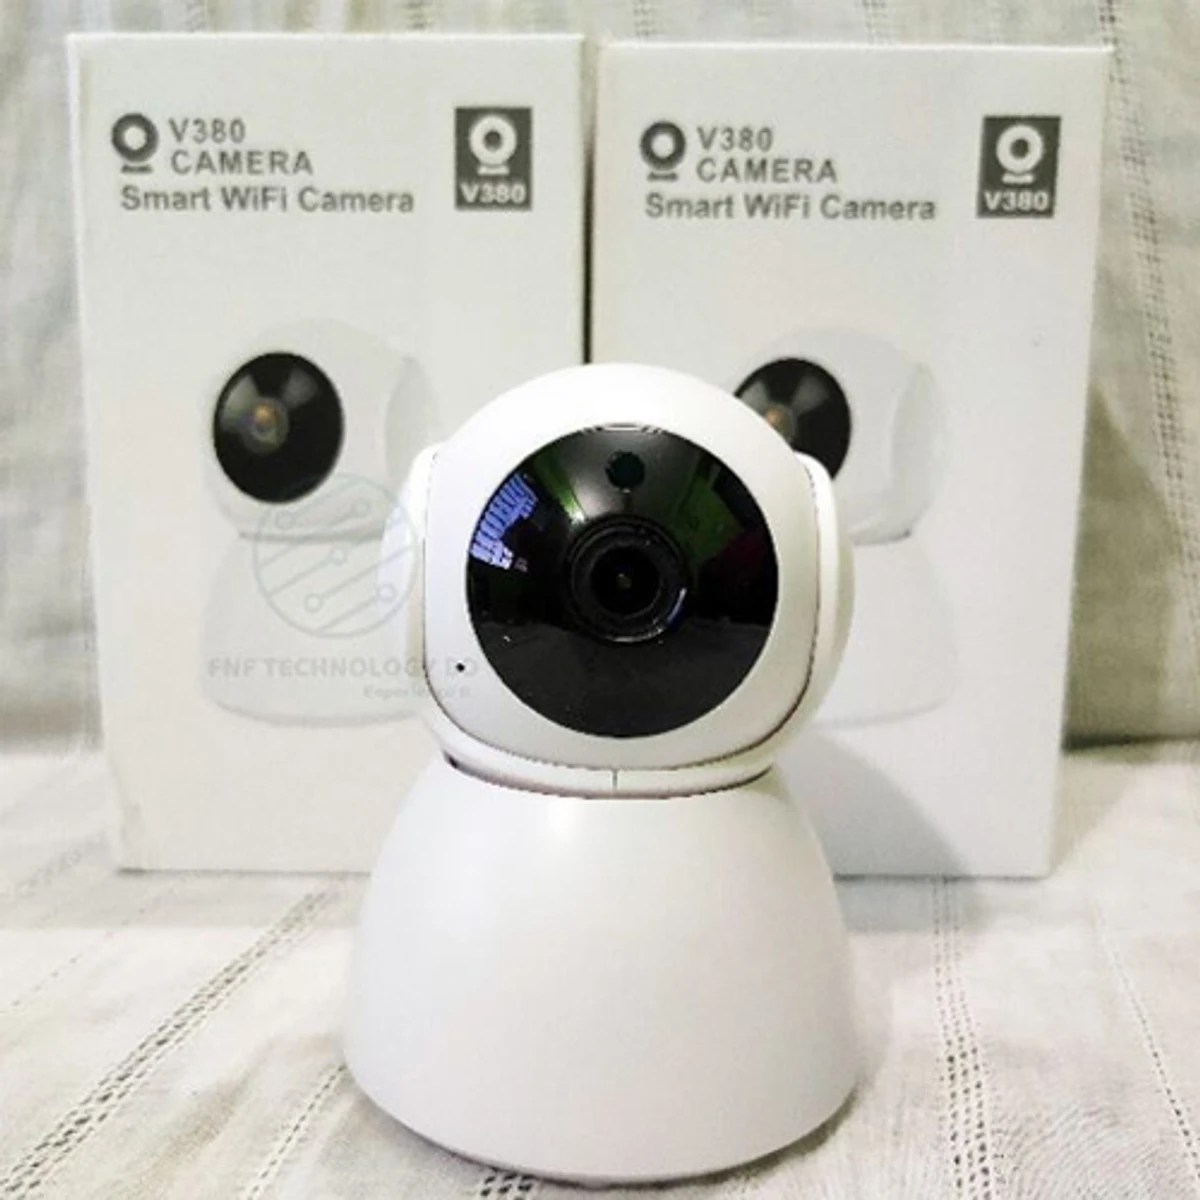 V380 Smart WiFi Camera (IPC-V380-Q7-A)